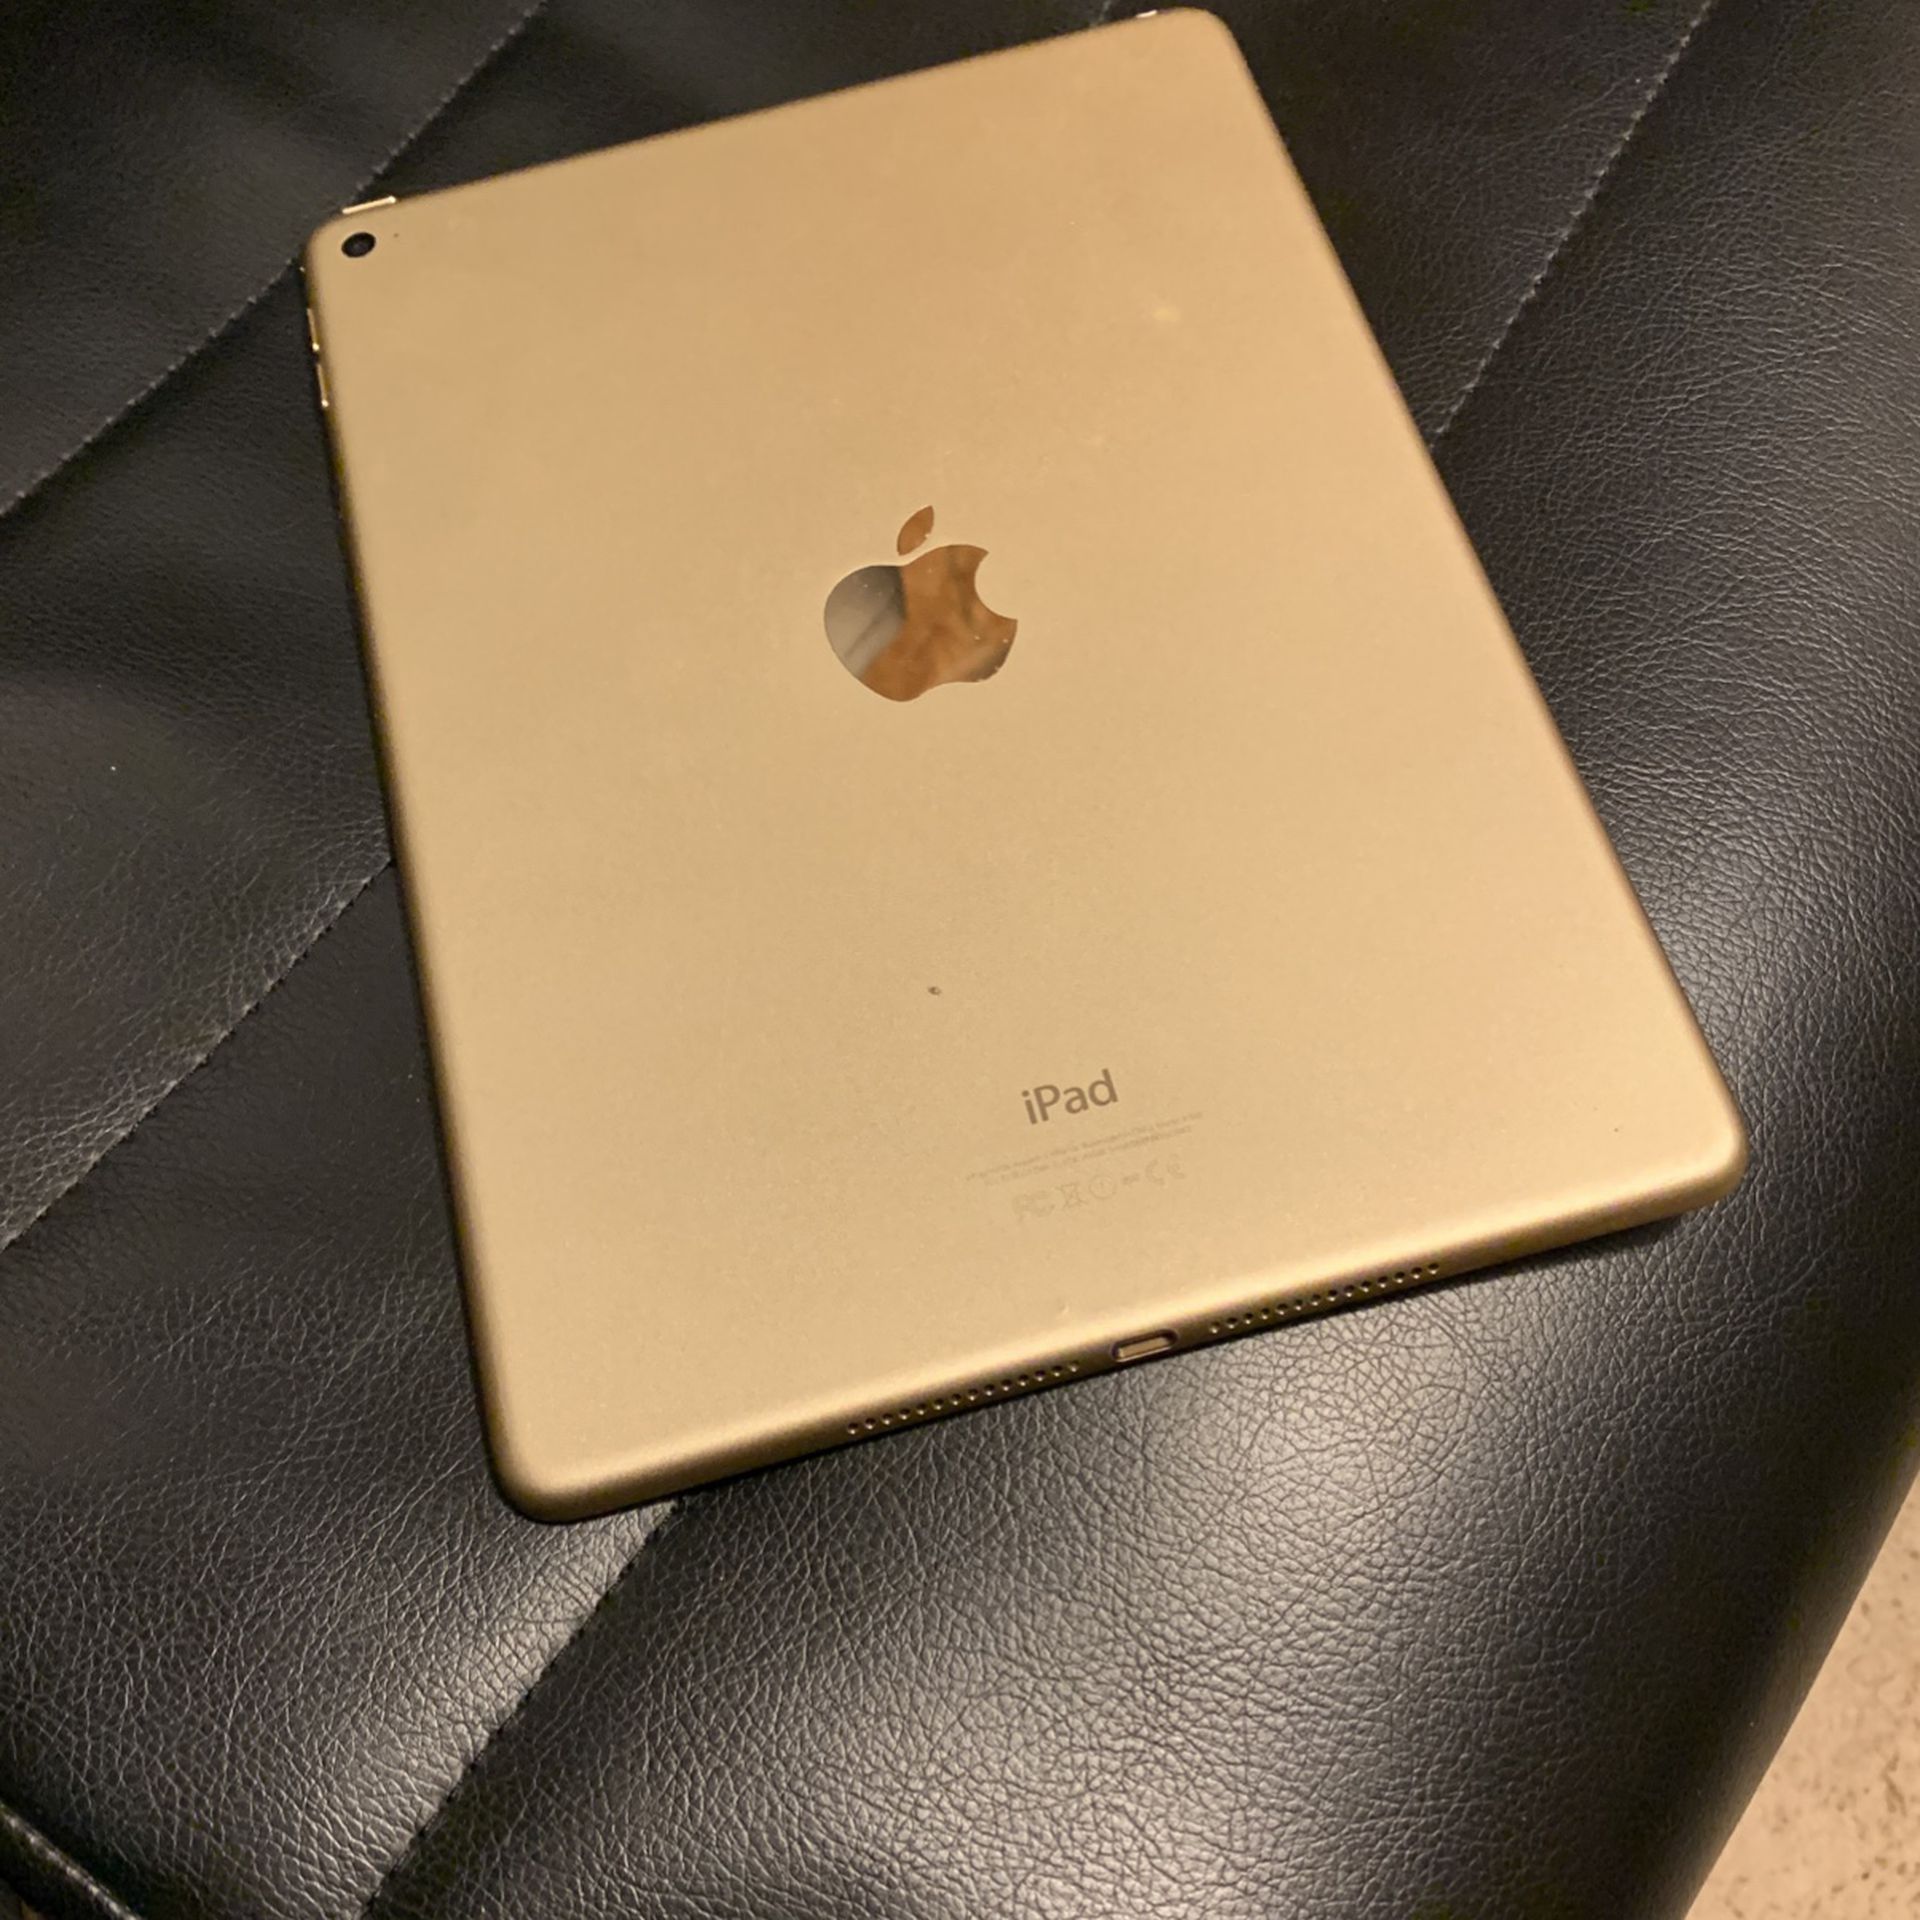 iPad Air 2 - Won’t Charge Or Turn On